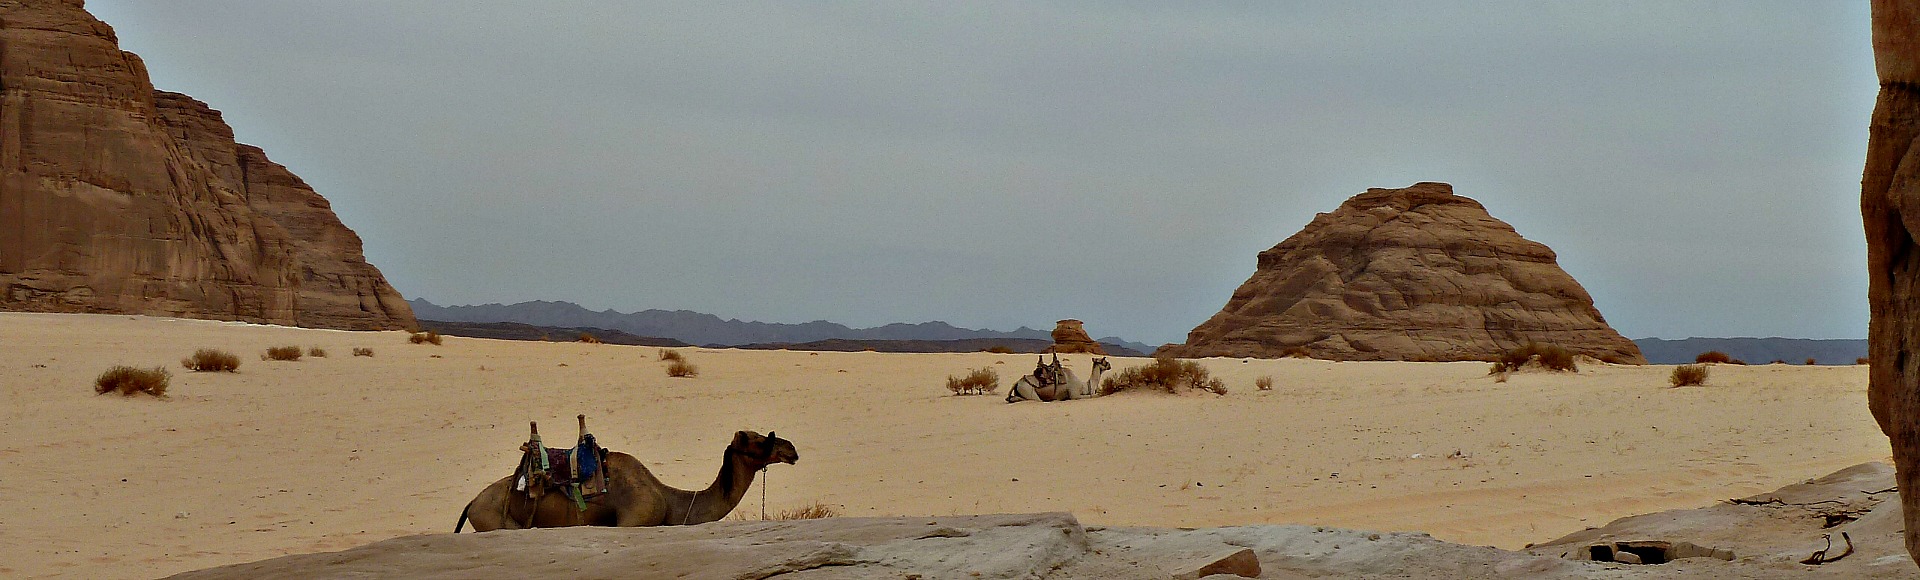 sinaï woestijn desertjoy